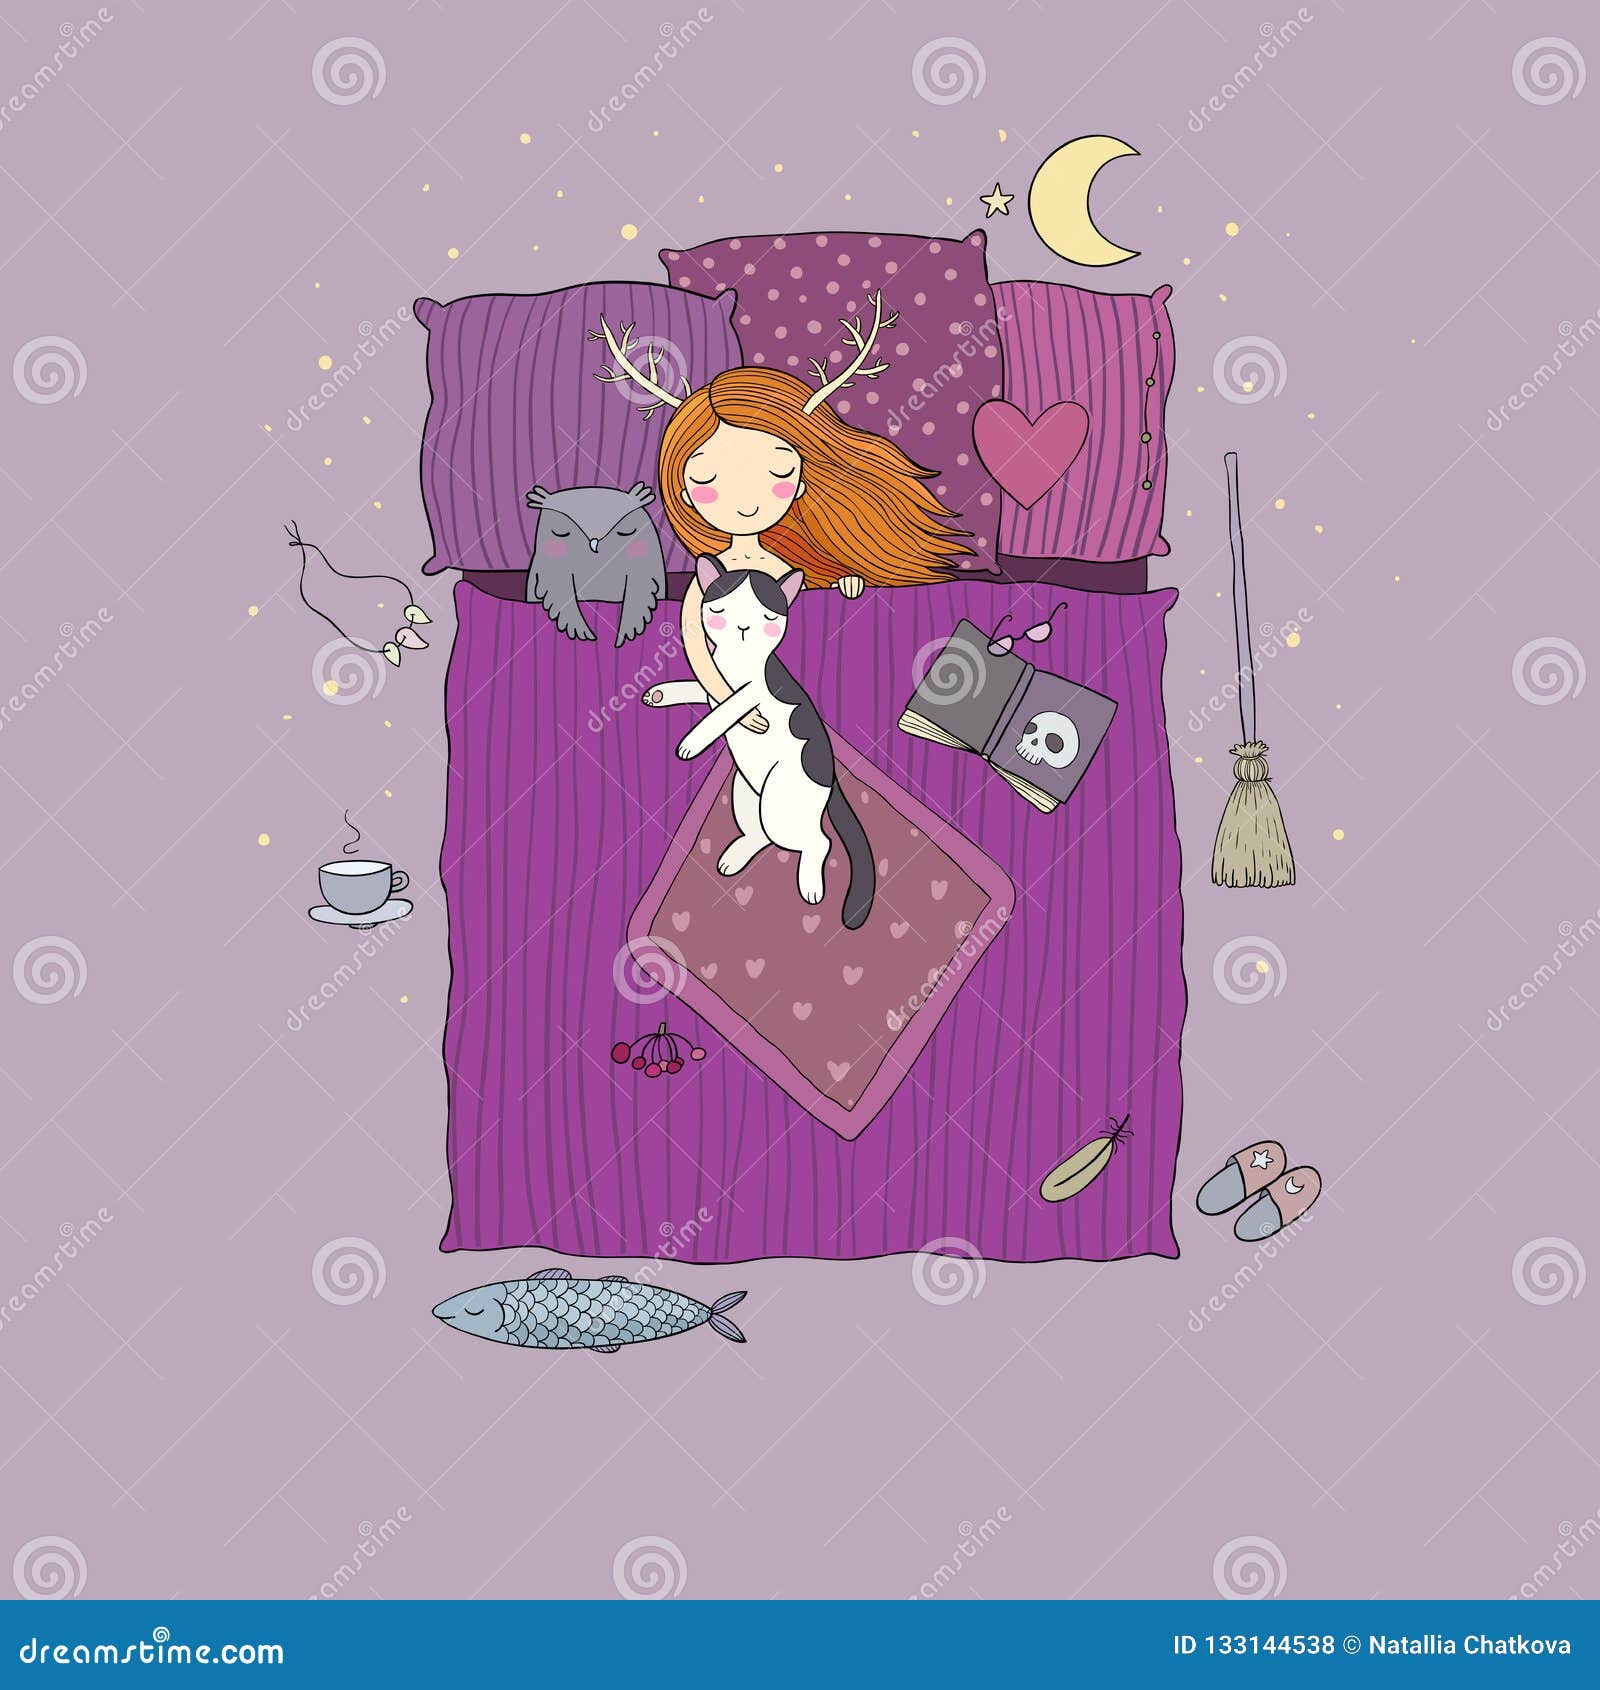 Sleeping Girl And Cat Good Night Sweet Dreams Stock Vector Illustration Of Broom Dream